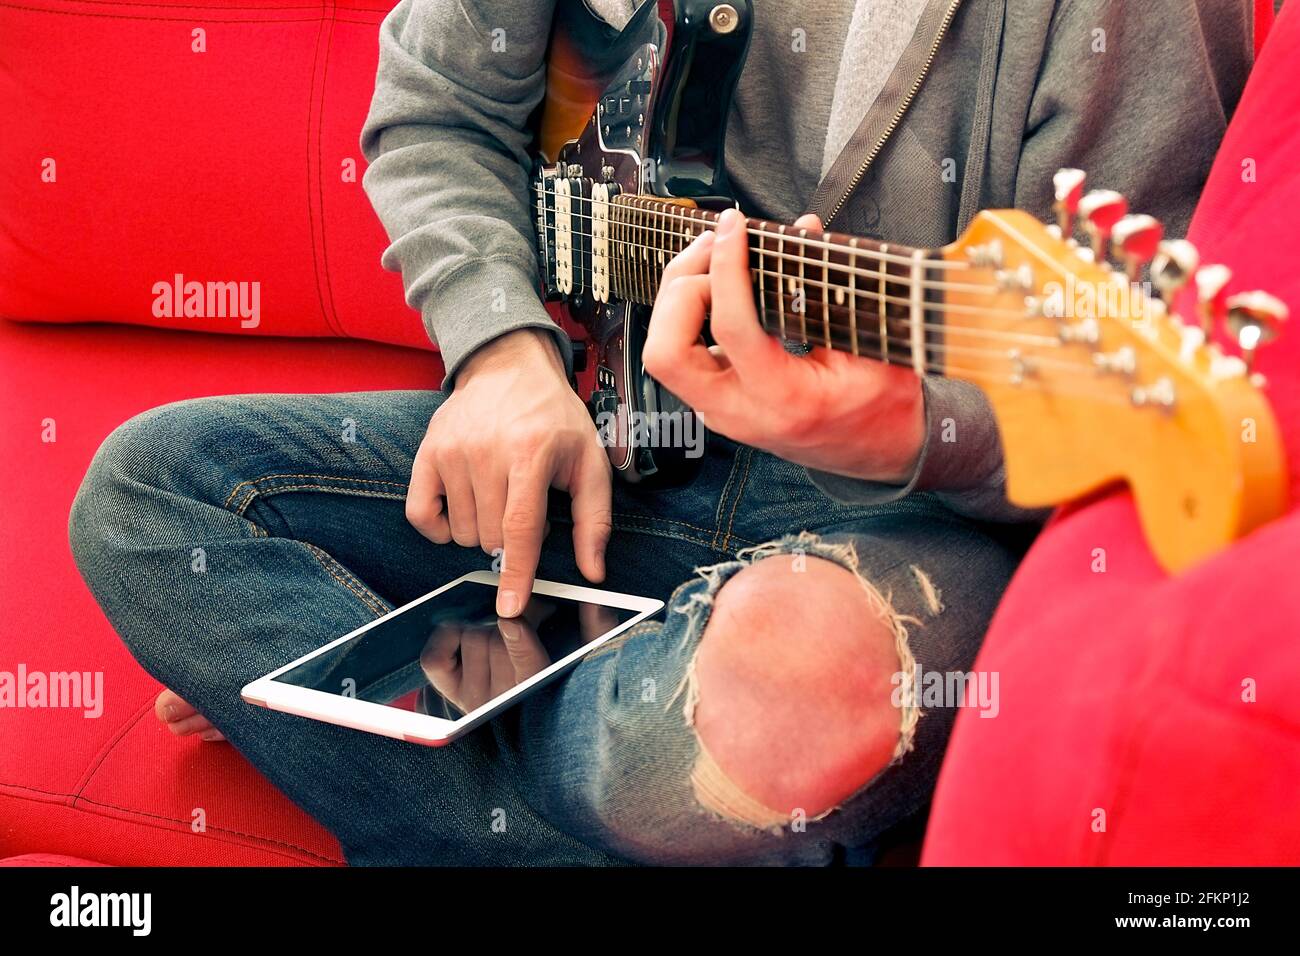 Lässiger junger Mann in zerrissenen Jeans, spielt Sunburst-Offset-E-Gitarre.  Junger Musiker, der Online-Musikinstrumentenkurs auf Wireless i nimmt  Stockfotografie - Alamy